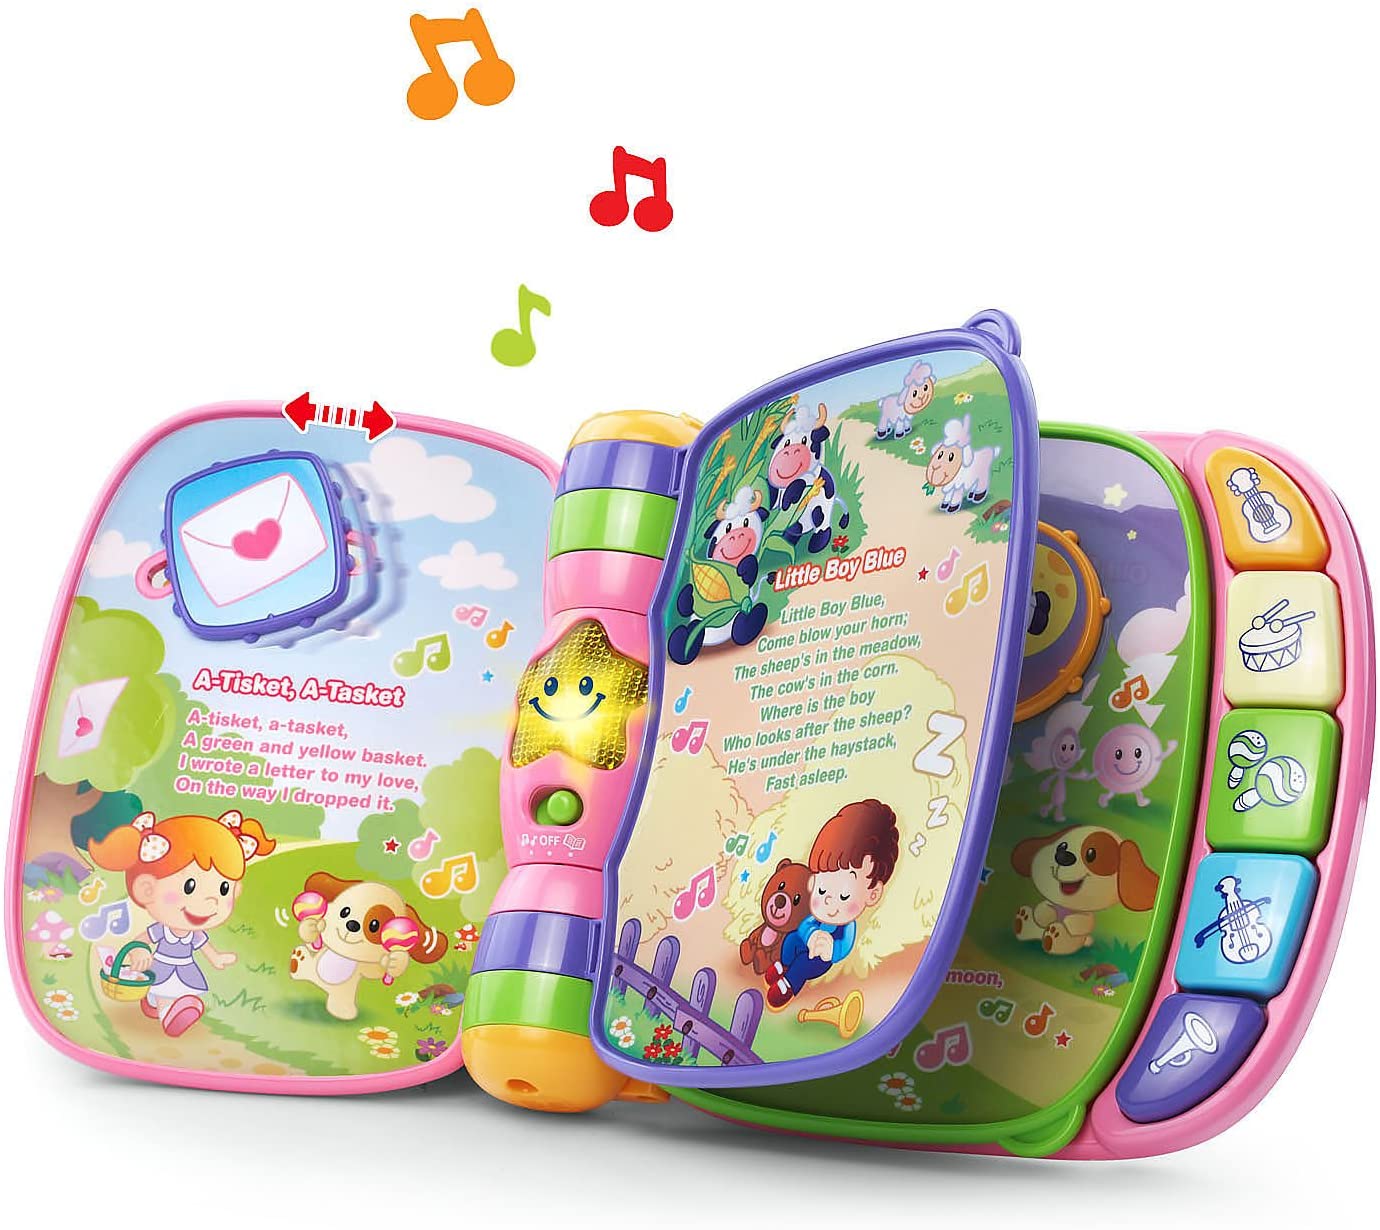 VTech Musical Rhymes Book, Pink -  Classic Nursery Rhymes